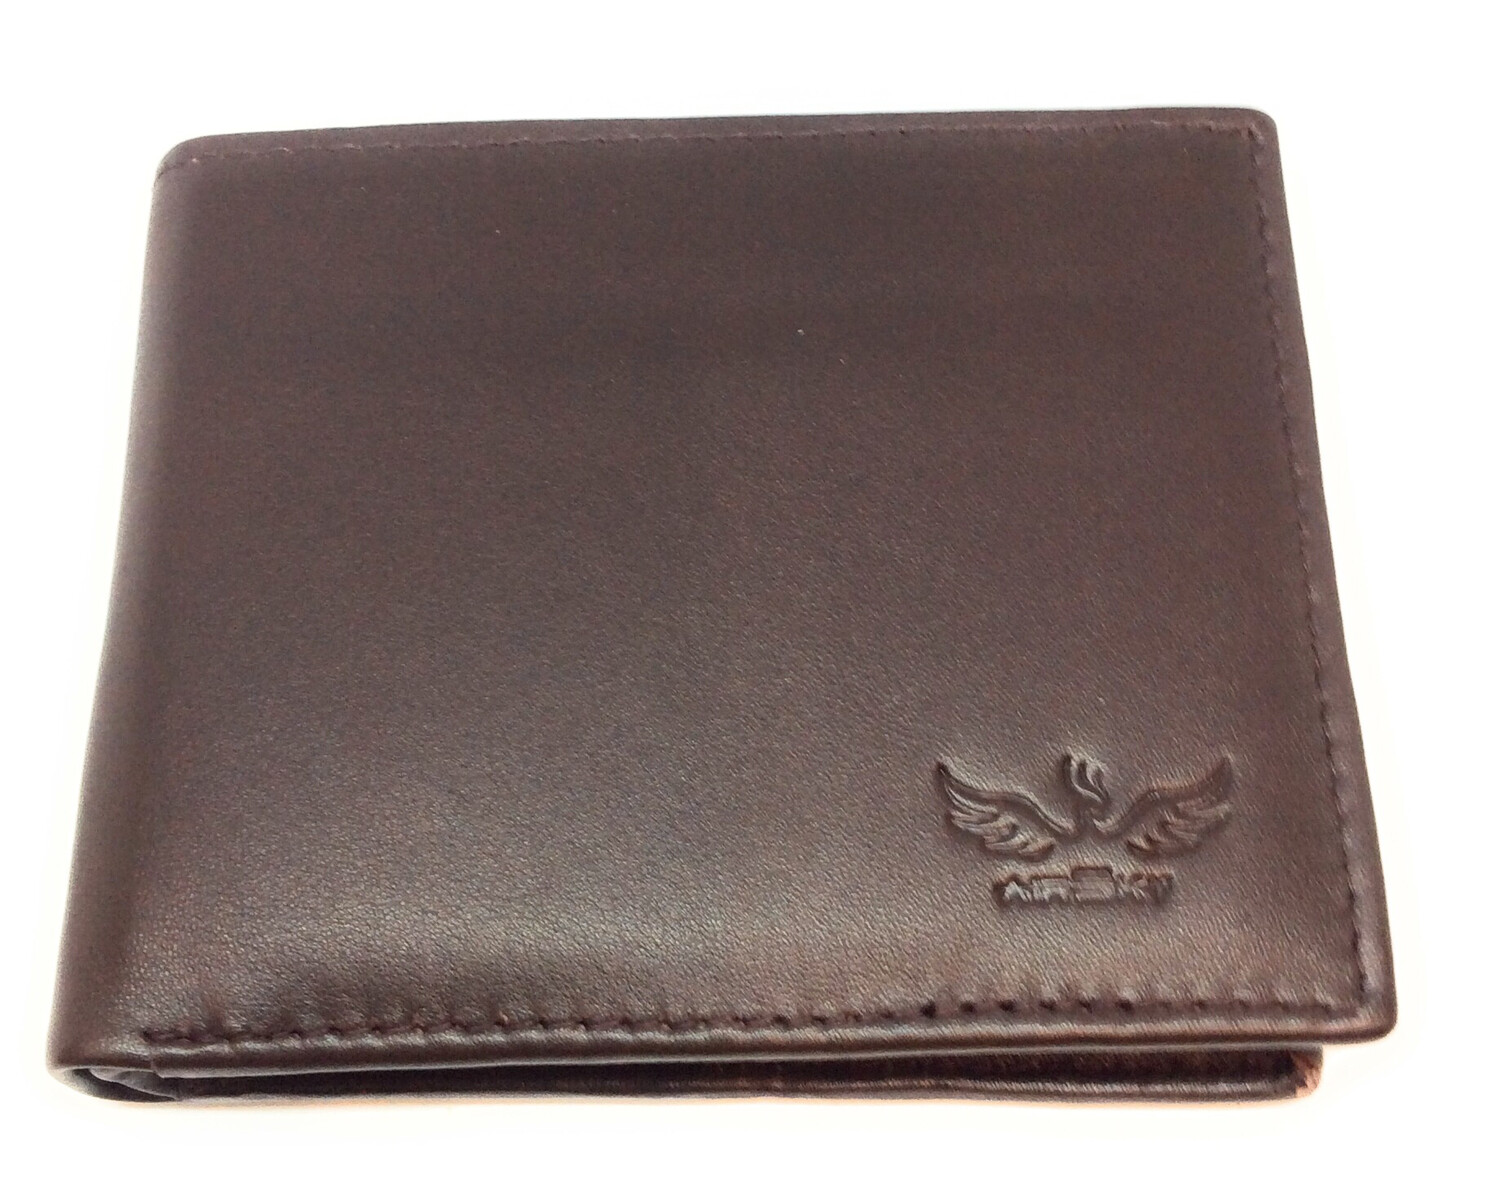 MEN genuine leather wallet